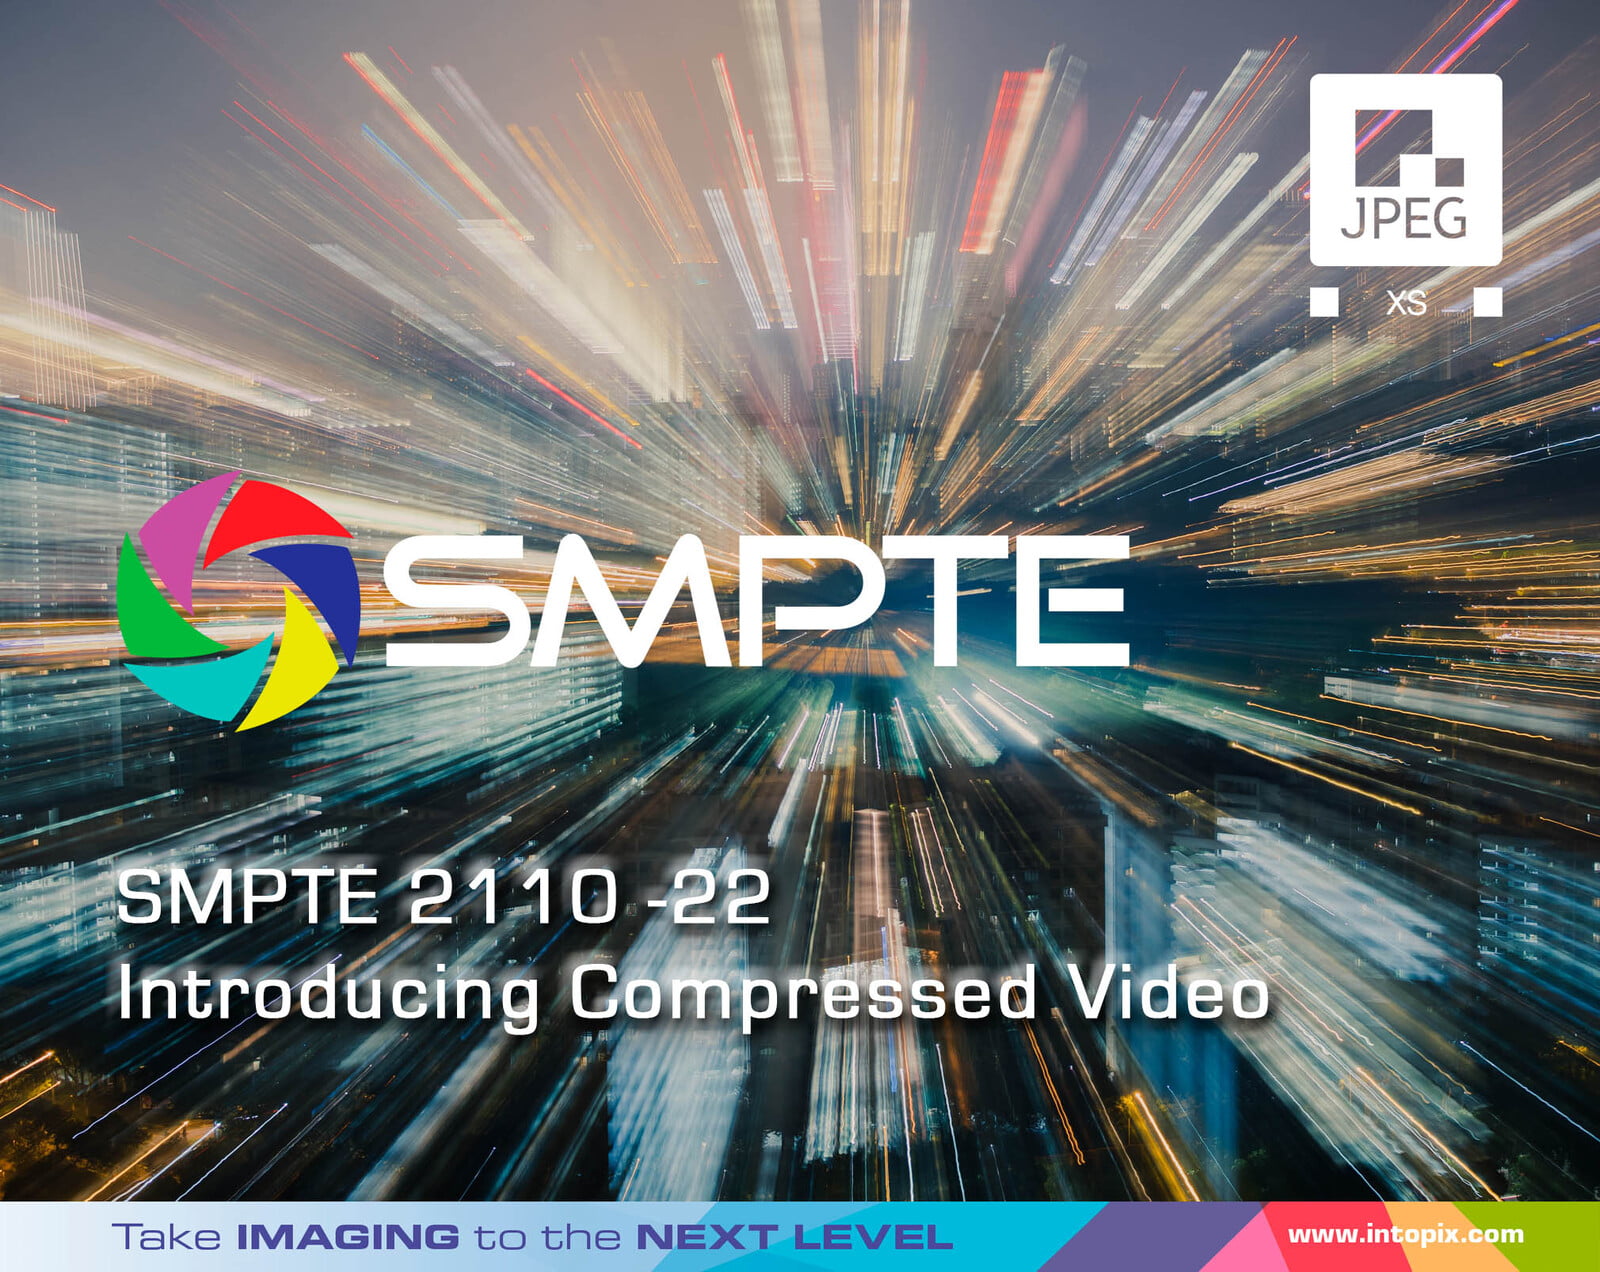 Adding Compression to SMPTE 2110